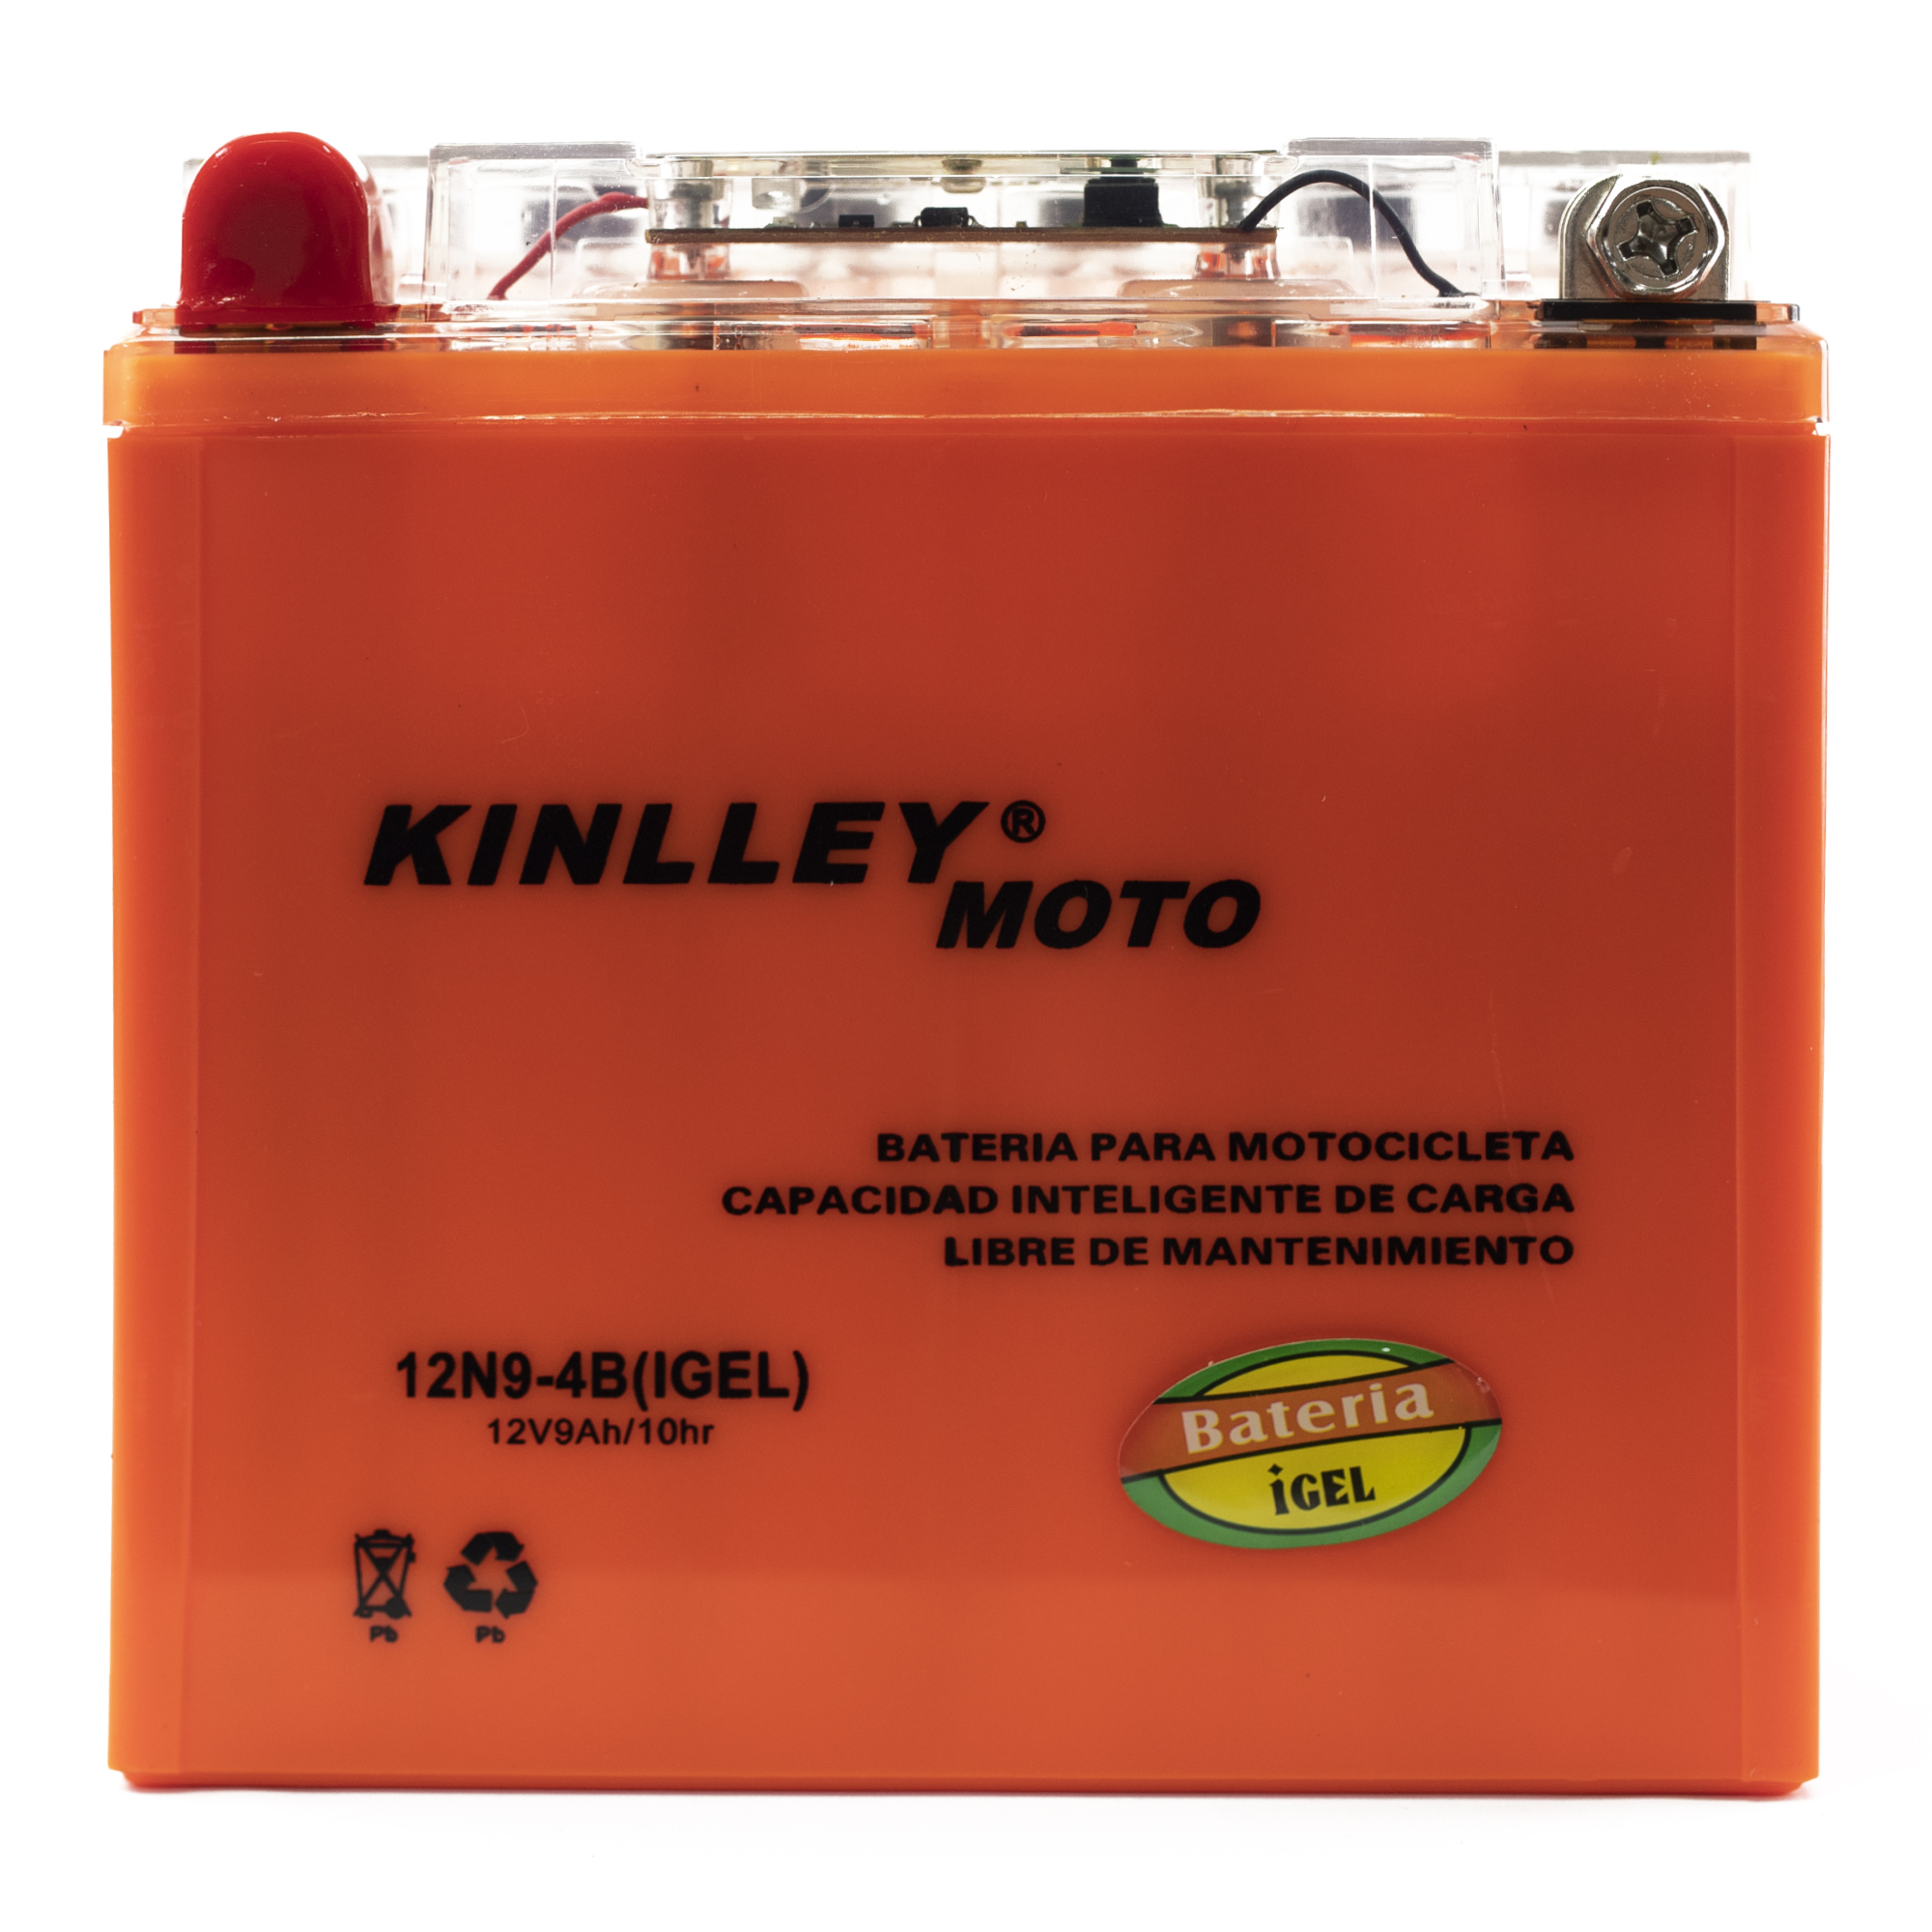 Bicimex Detalles Bateria para motocicleta YTZ10S de gel Kinlley